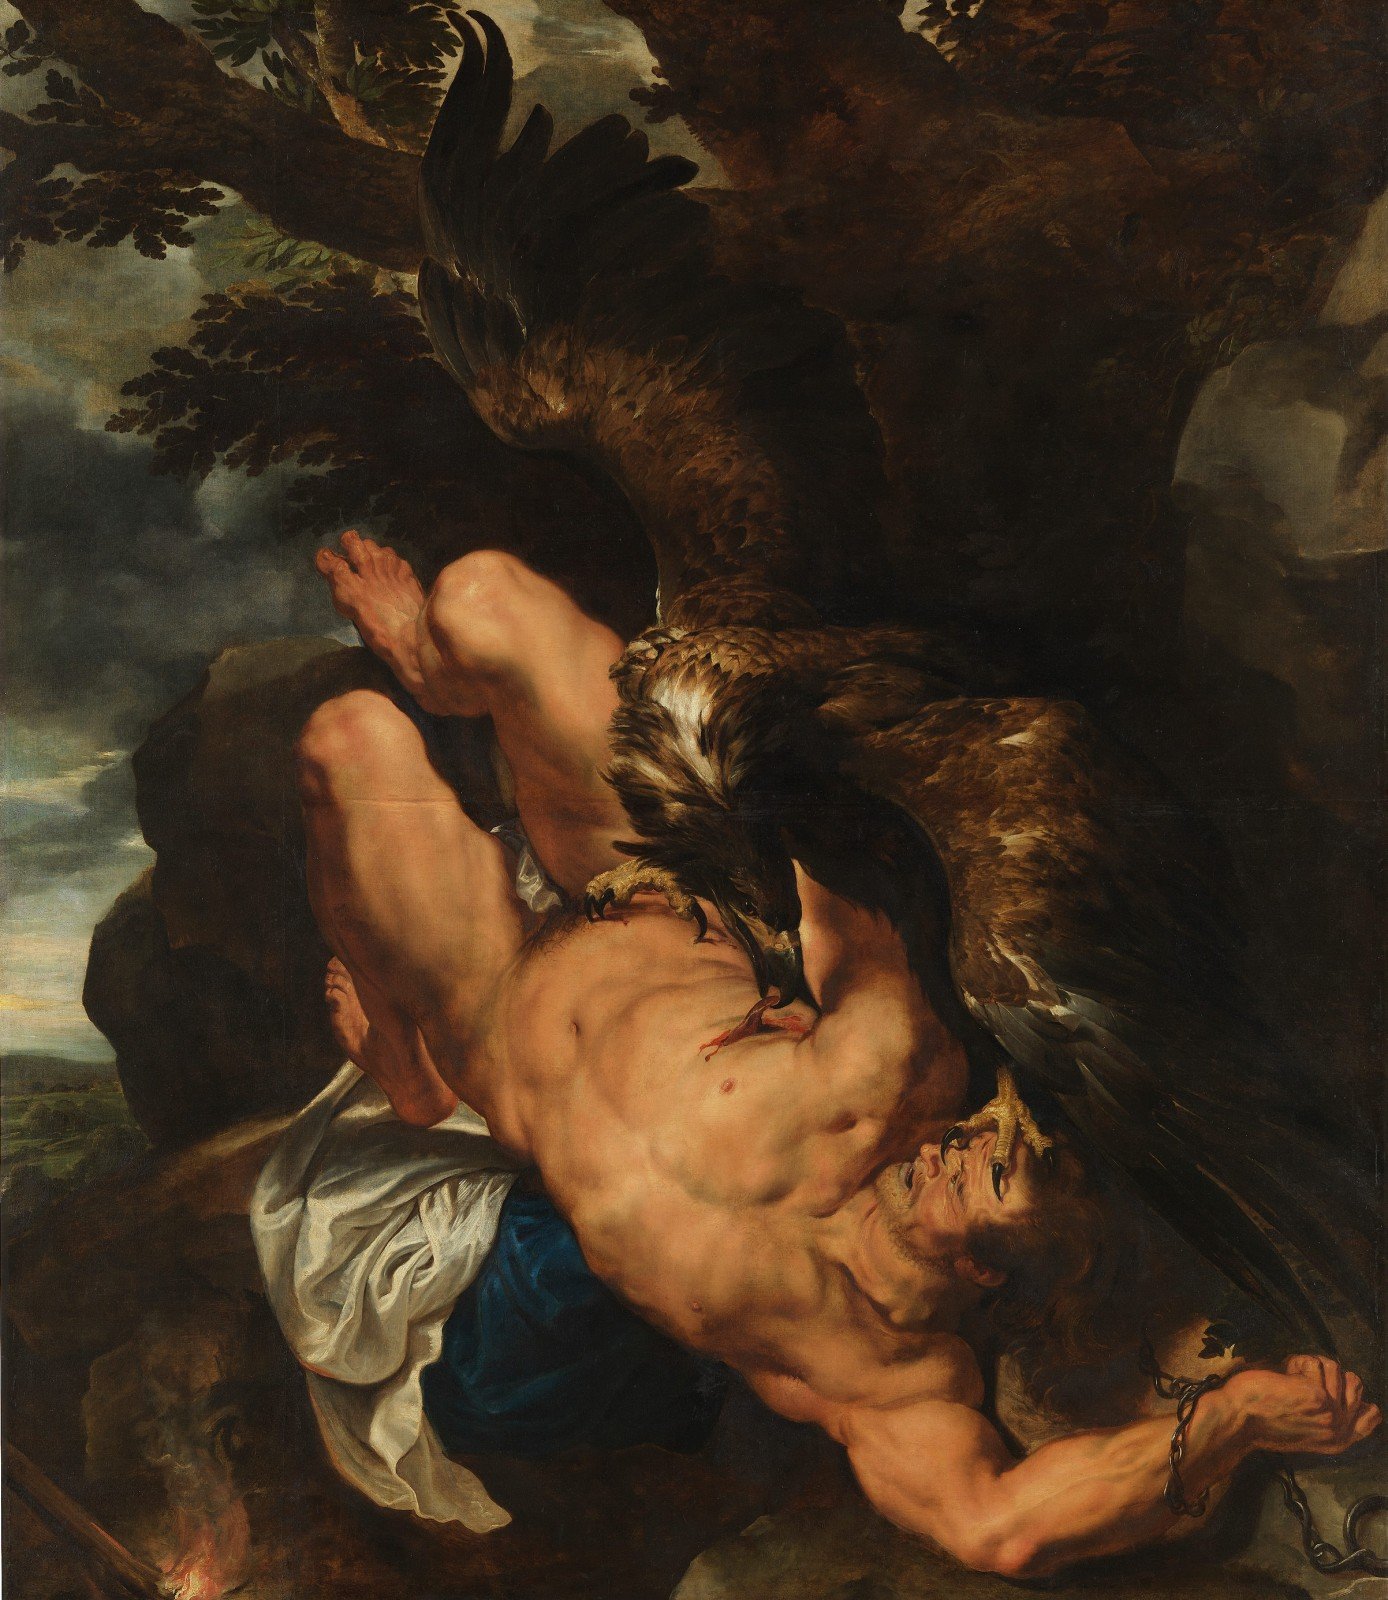 “Prometheus Bound”, Rubens and Frans Snyders, Oil on canvas, 242.6 x 209.5 cm, c. 1611, Philadelphia, Philadelphia Museum of Art